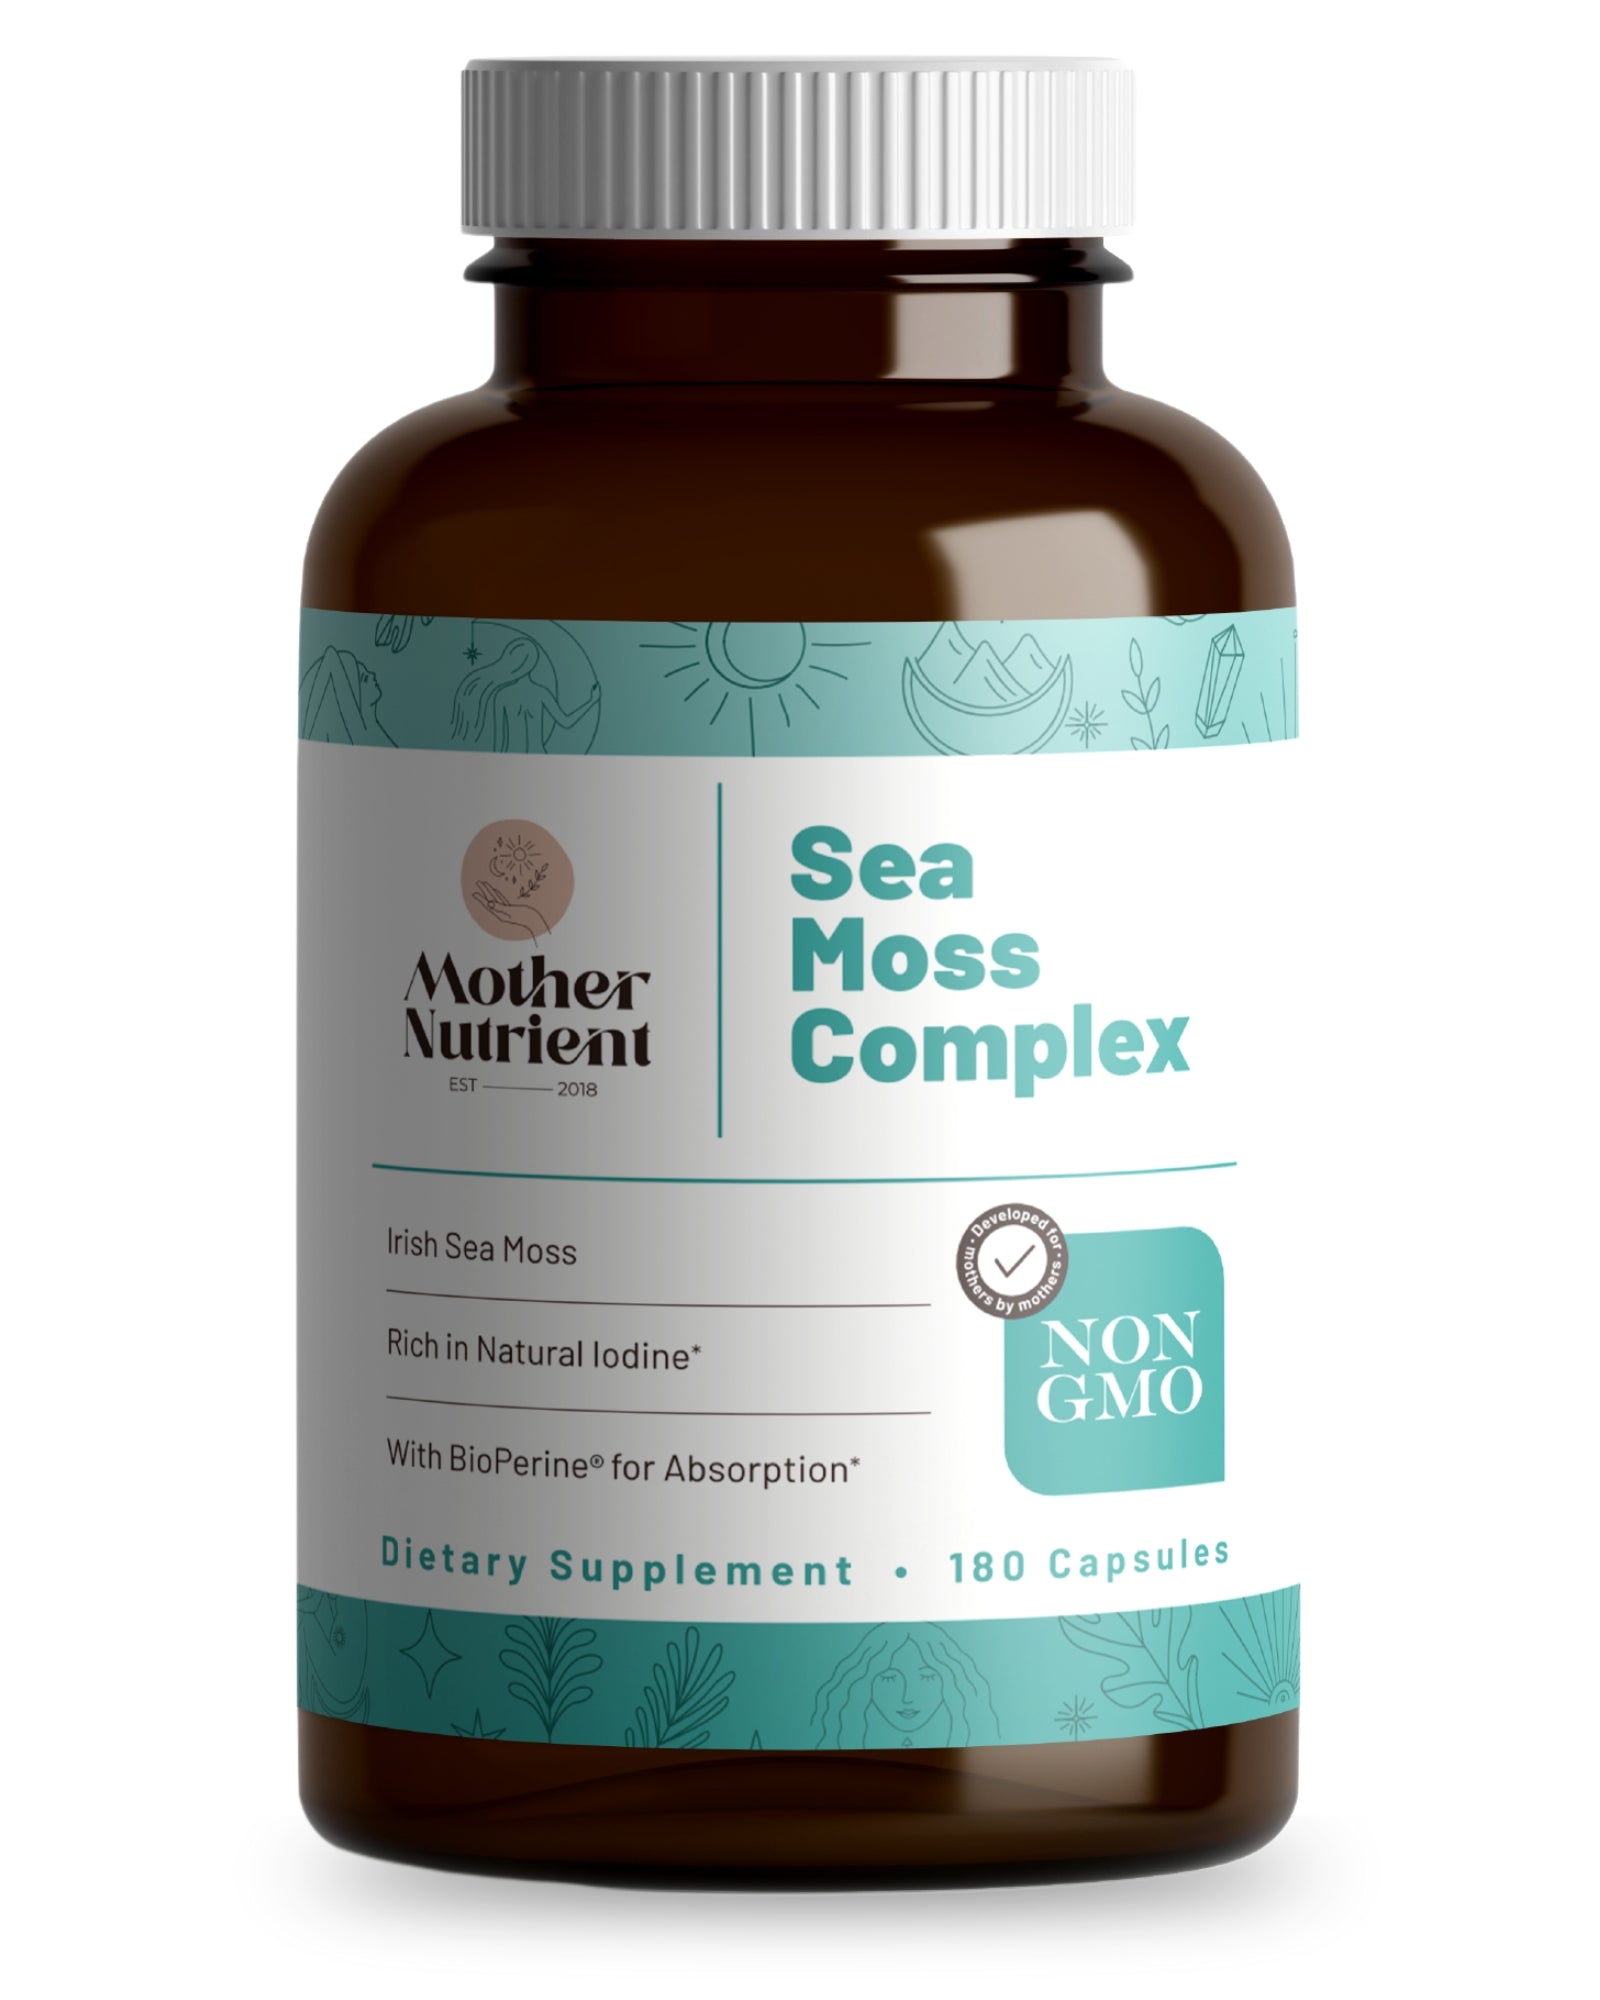 Wild Sea Moss – Organics Ocean